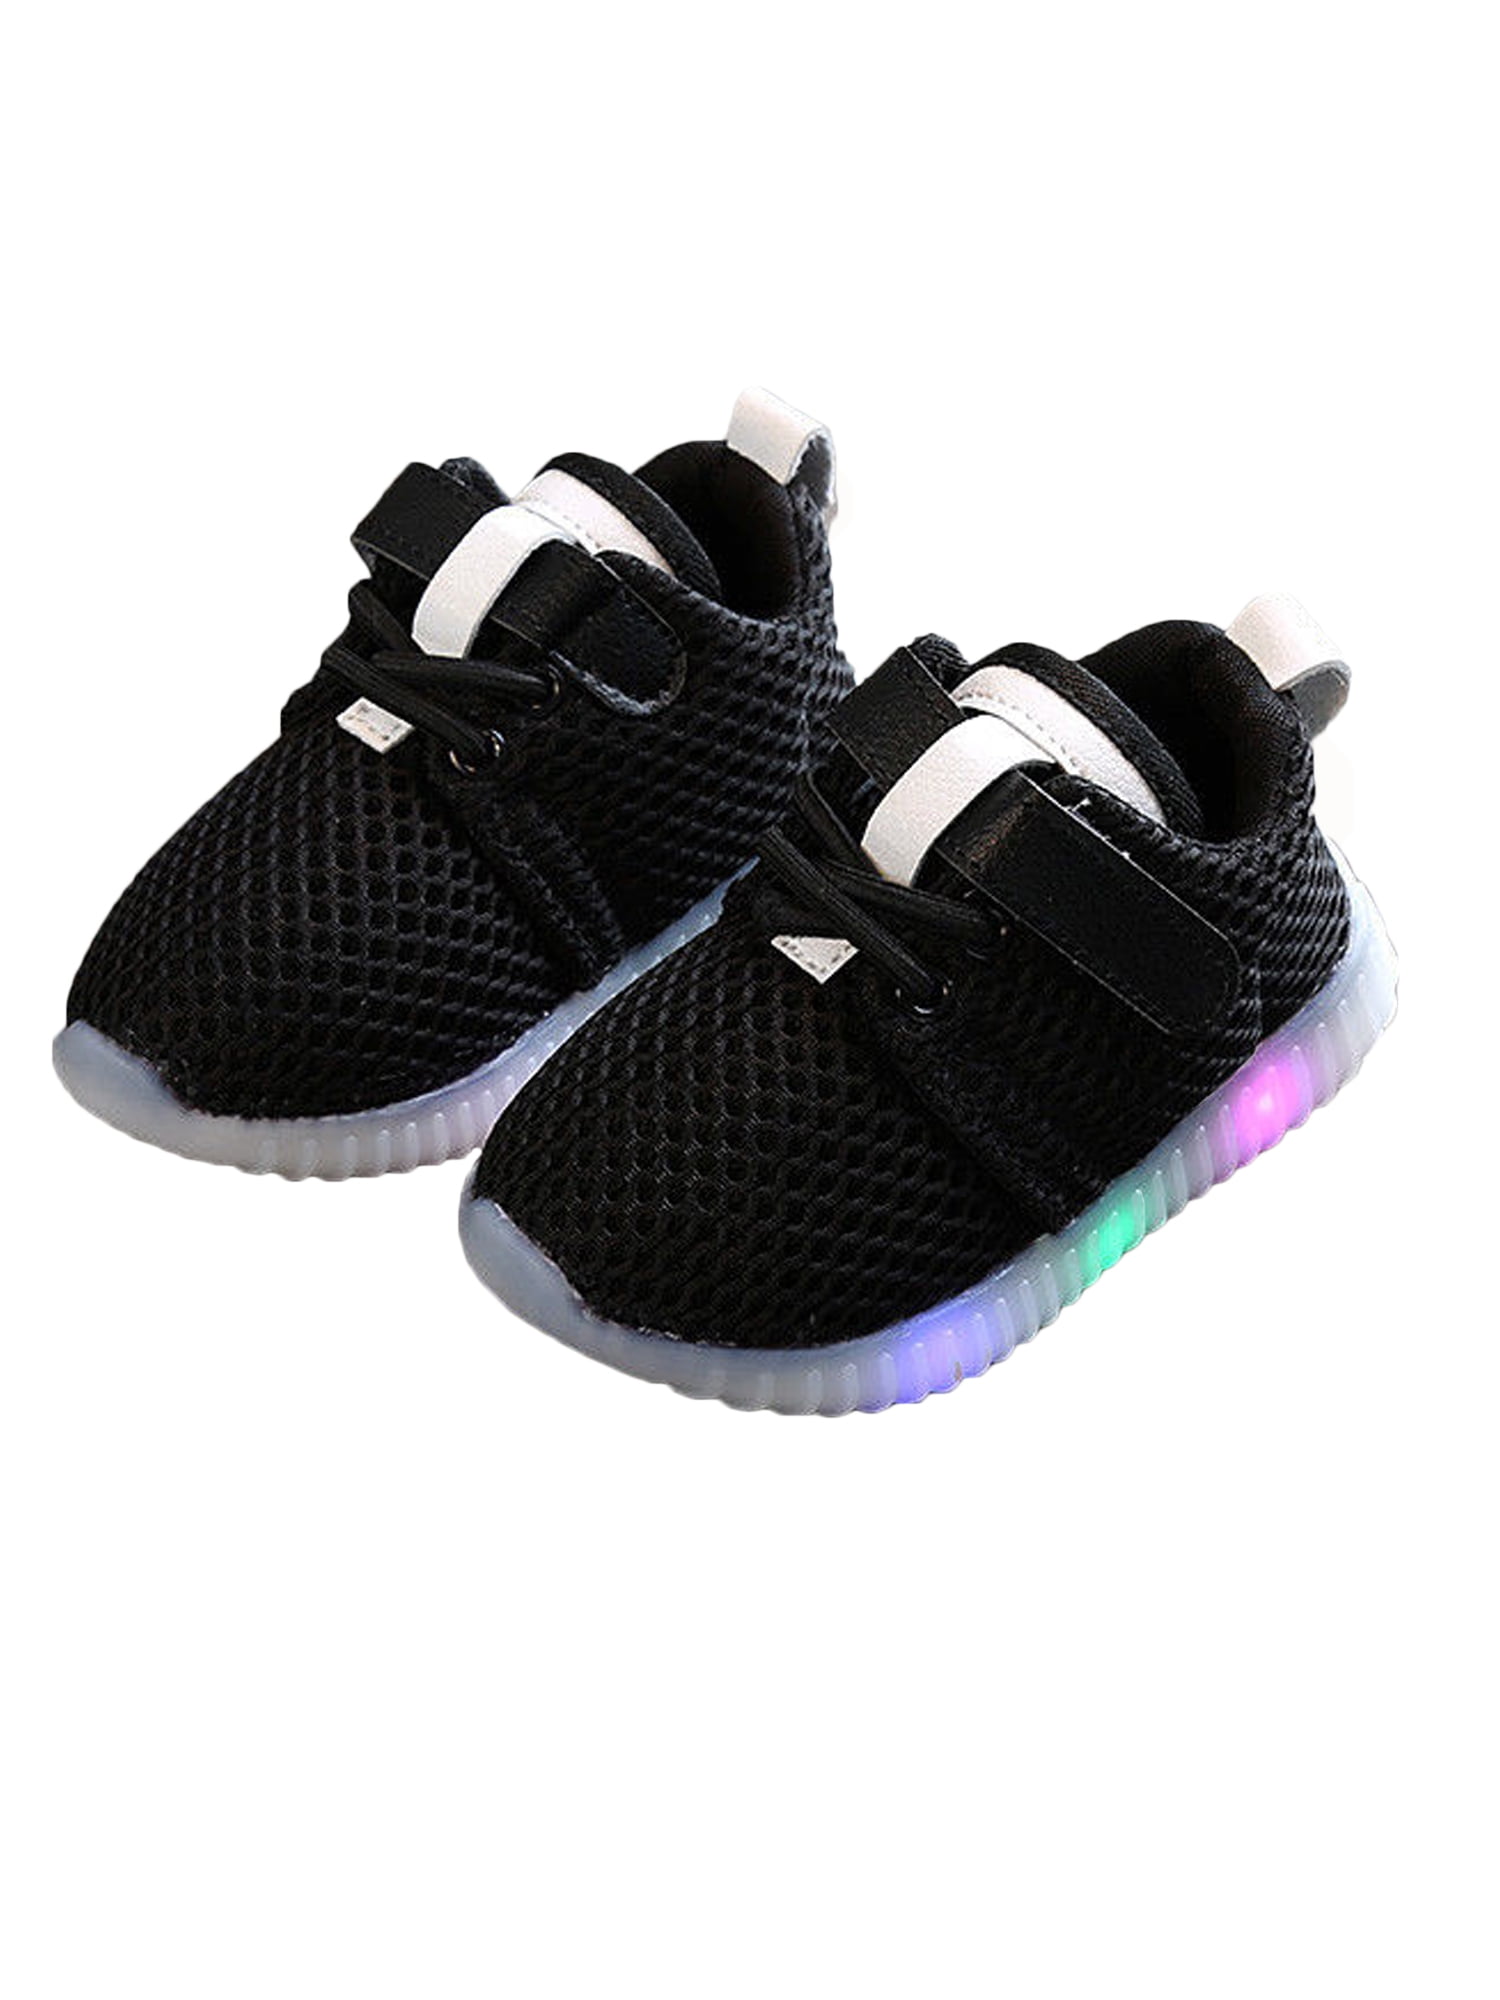 Baby Boys Girls Kids Running Shoes Sneakers LED Light Up Luminous Sport Trainer